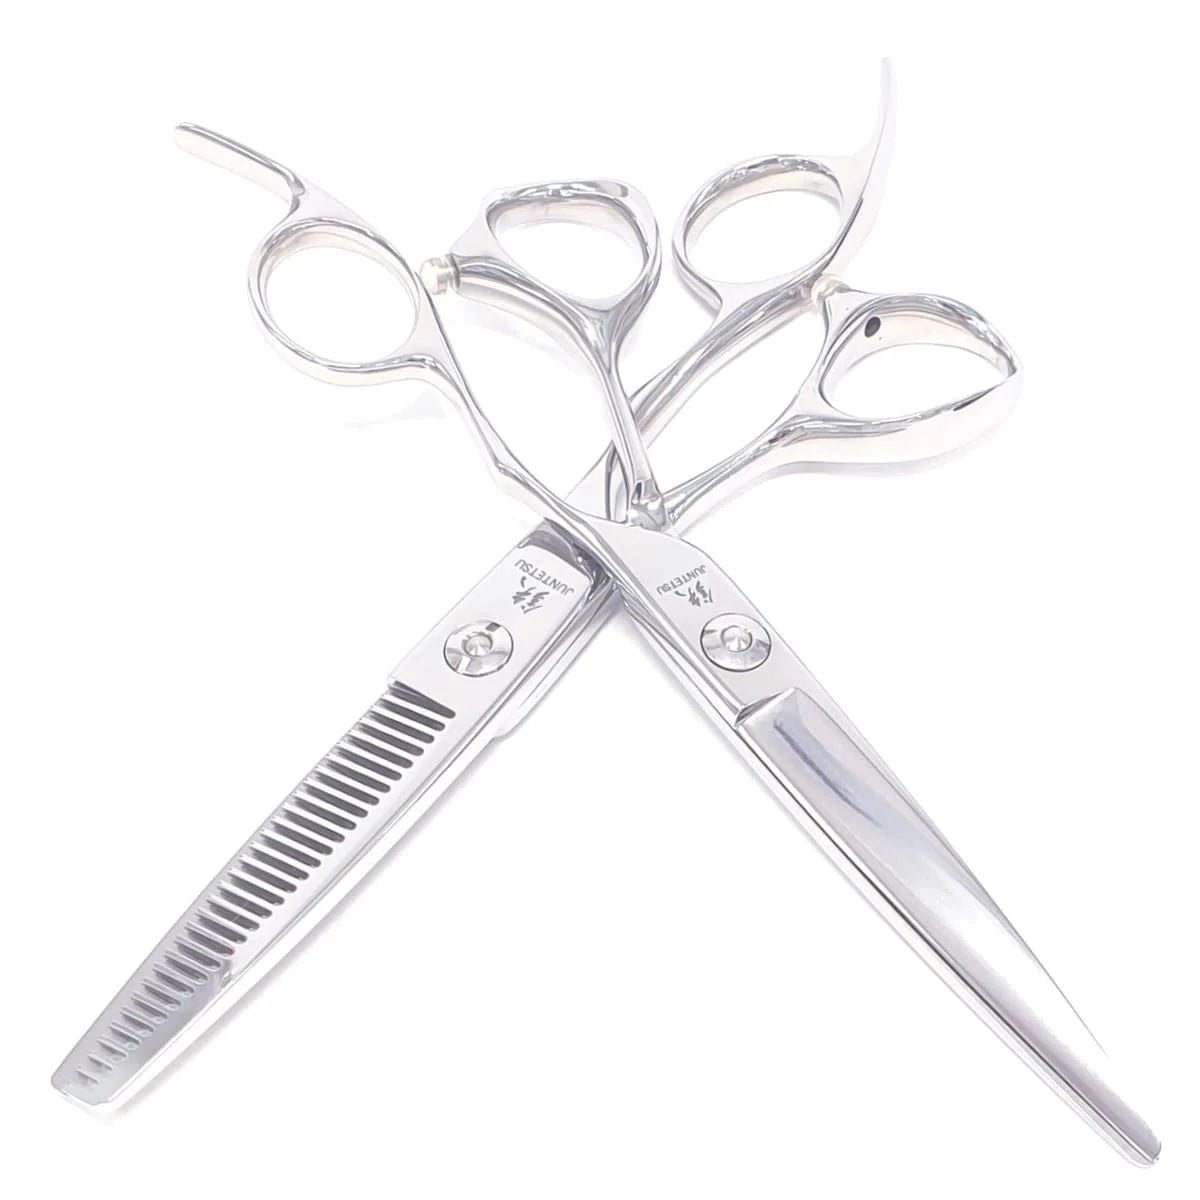 Juntetsu Offset Cutting & Thinning Scissors Set - Japan Scissors USA